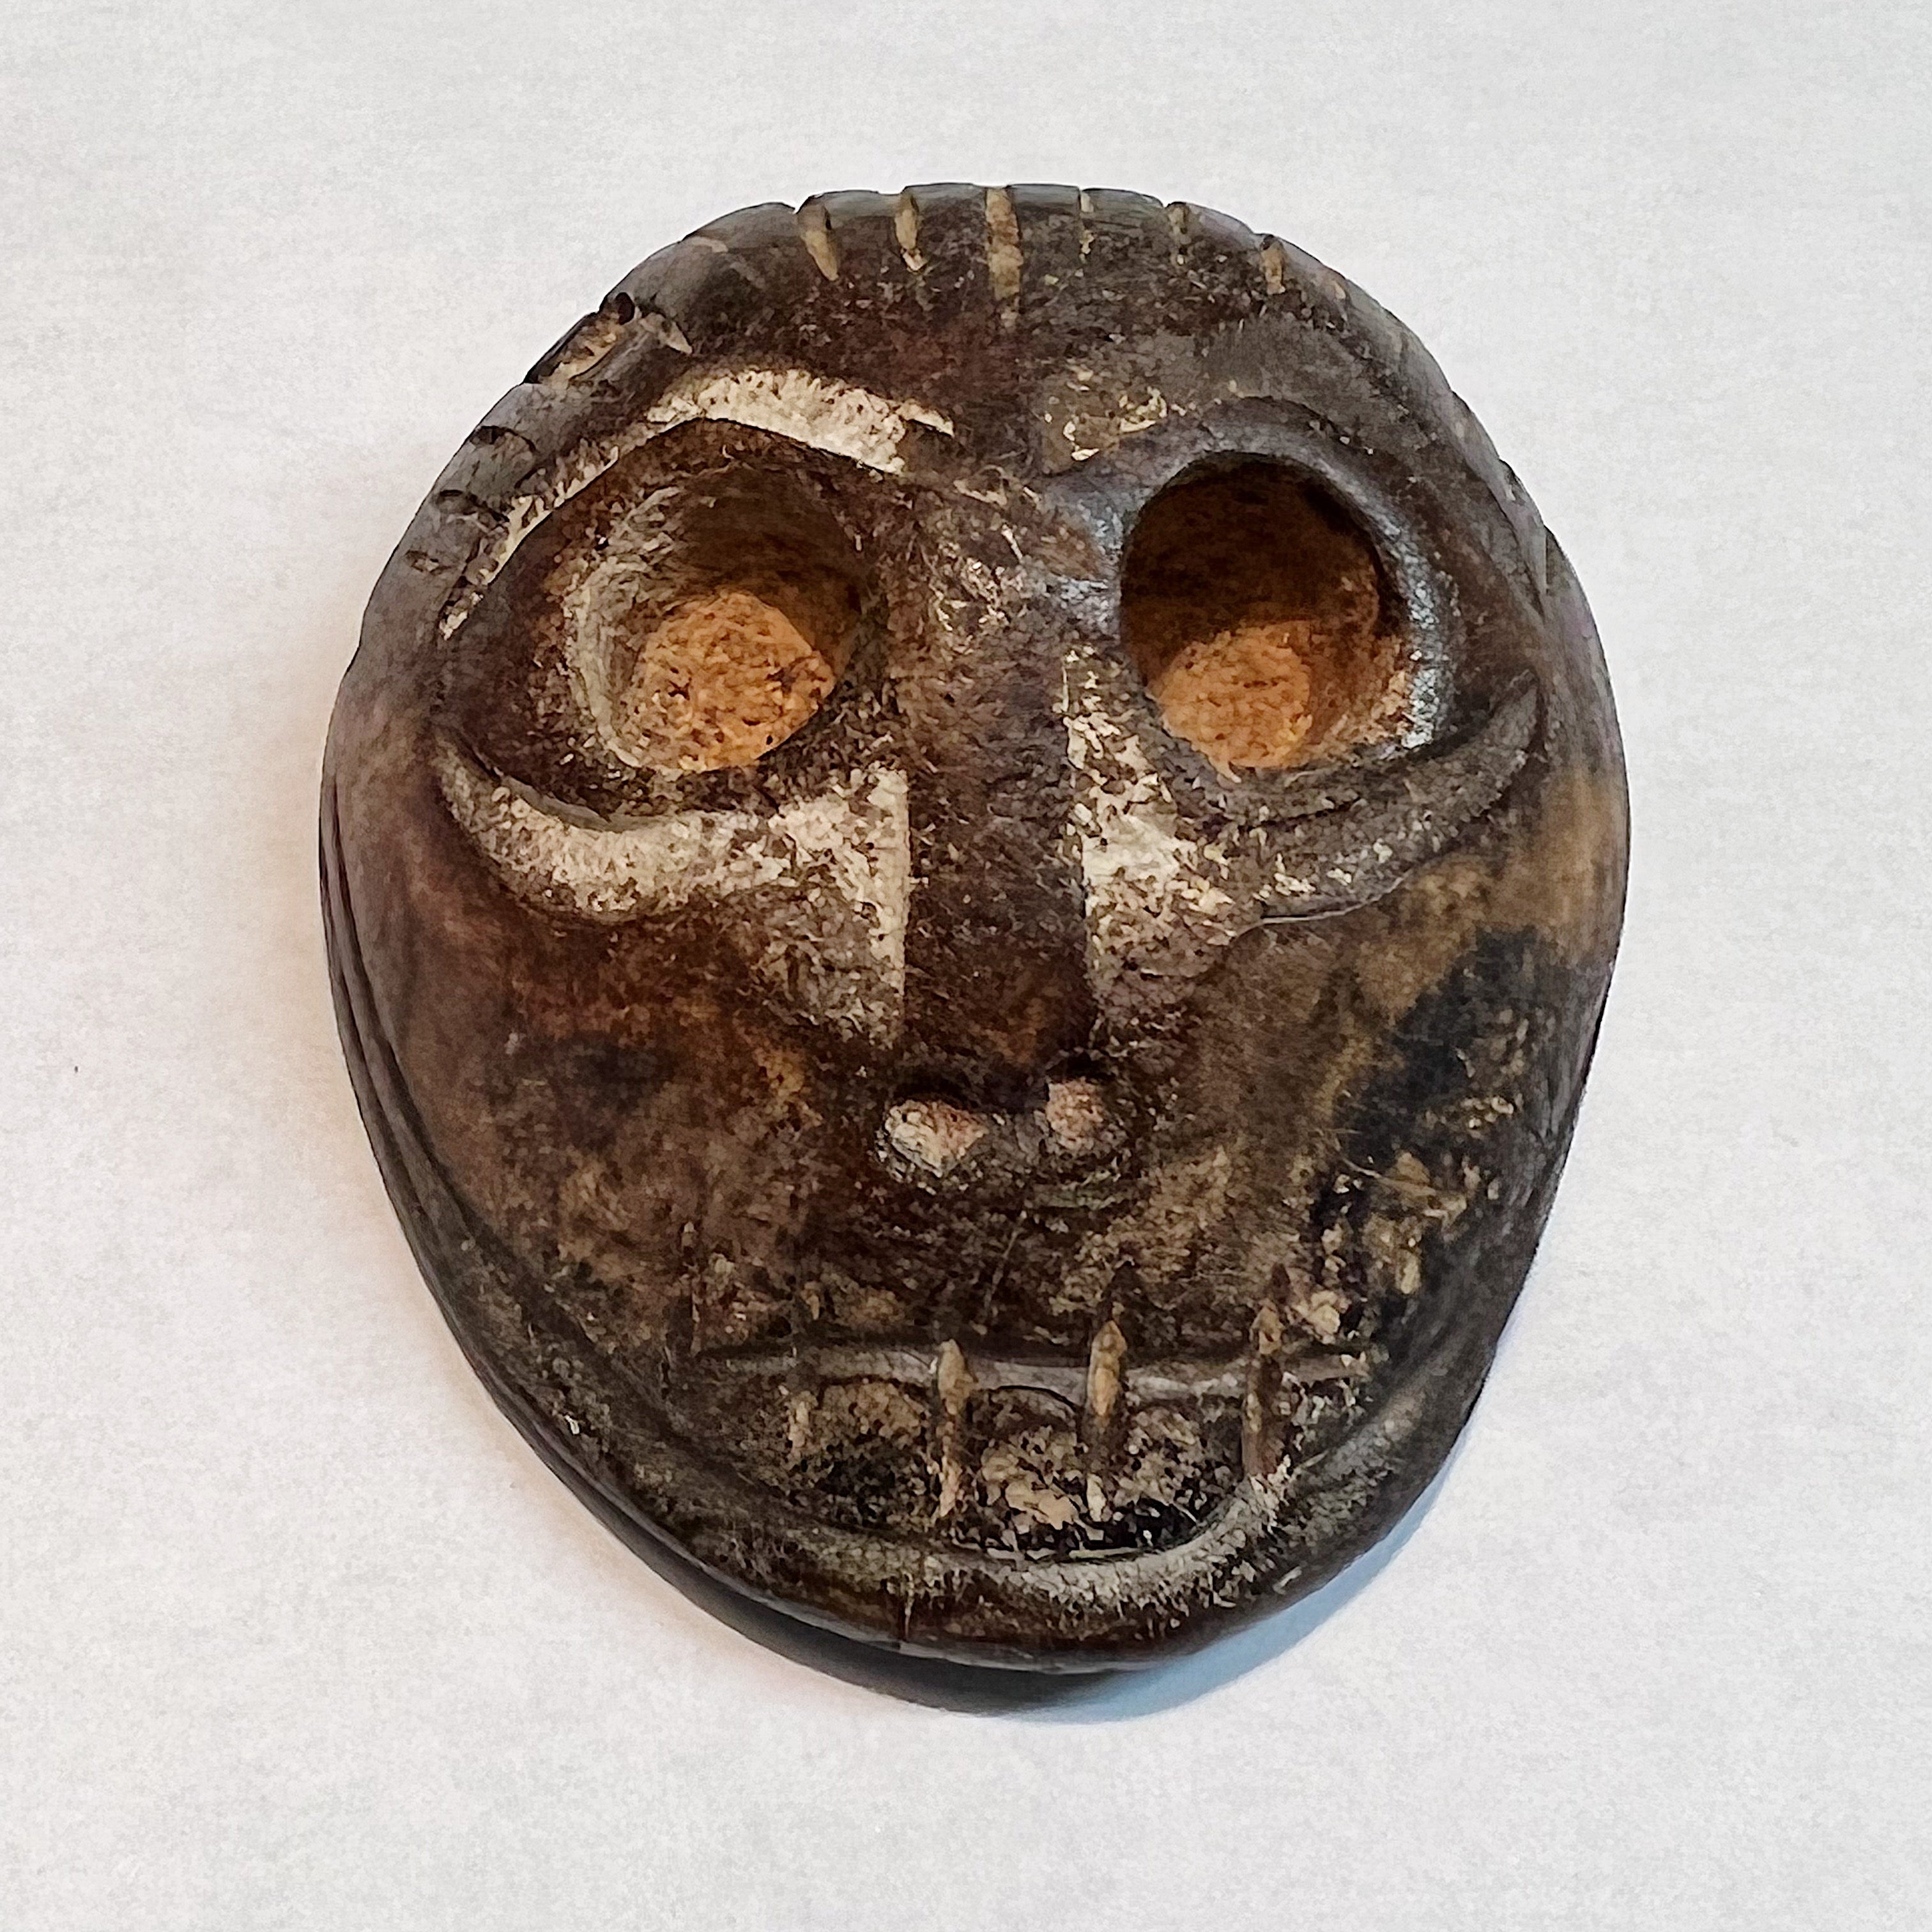 Rare Tibetan Bone Skull Amulet Sculpture - Vintage Tribal Style Skeleton Head - 2 1/4" x 2" - Spiritual Mysticism Artifact  - Rare Size